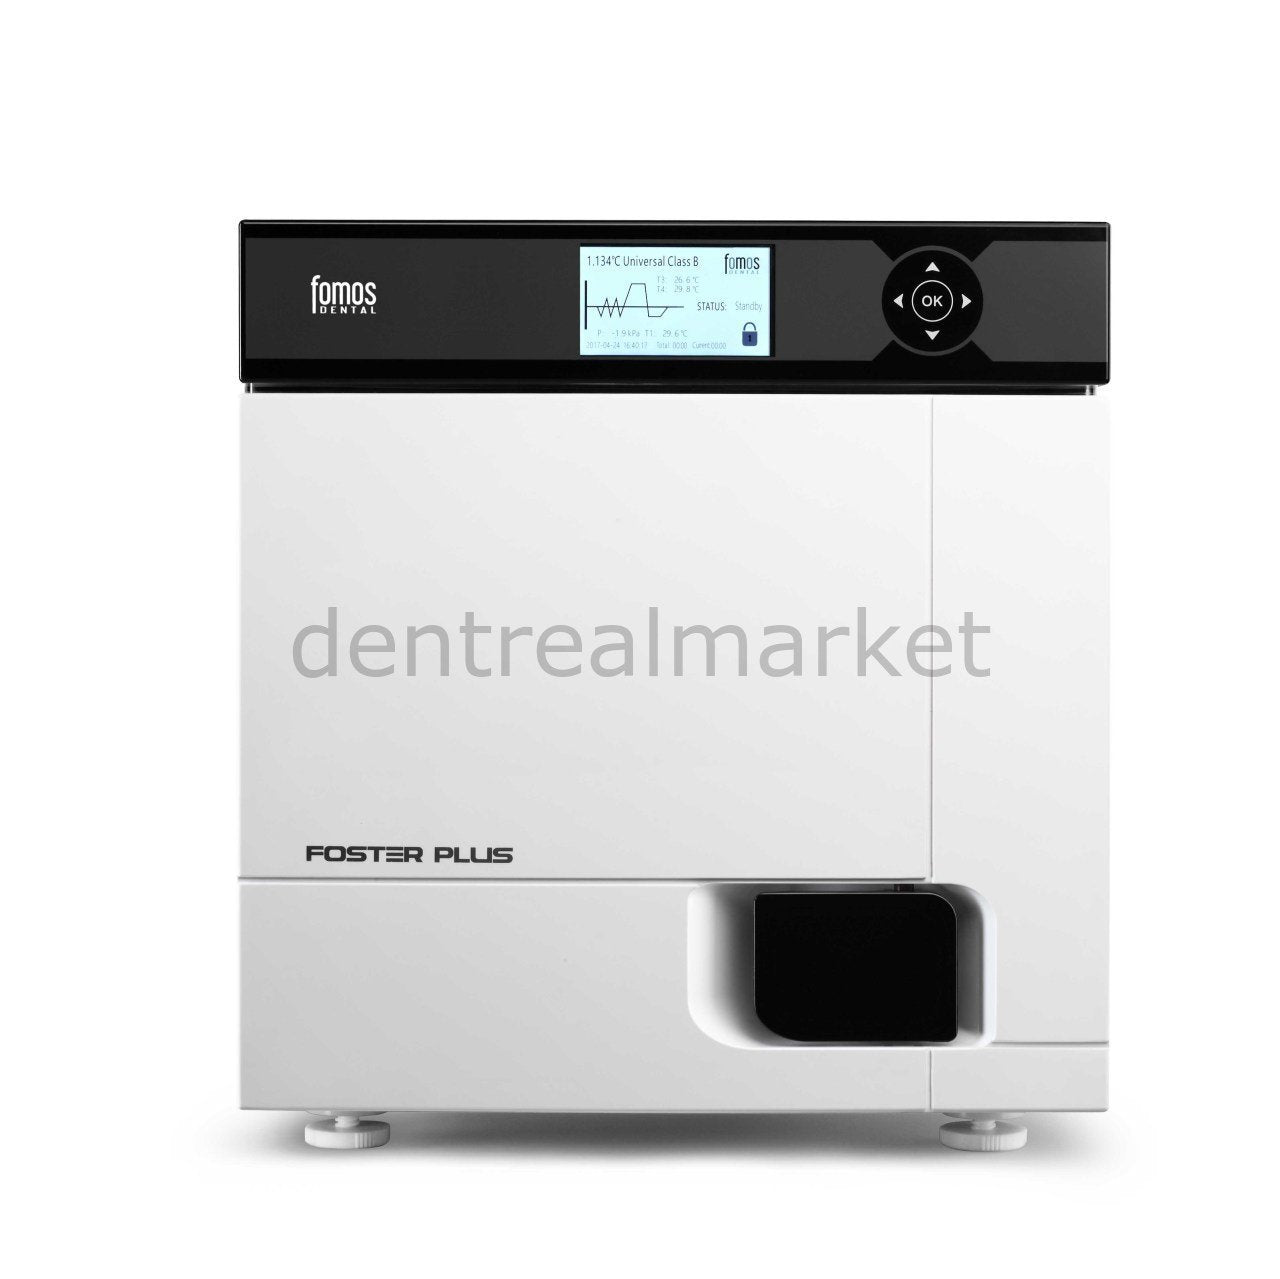 DentrealStore - Fomos Foster Plus 22 Lt B Class Autoclave Dental Starilizator- Color Screen